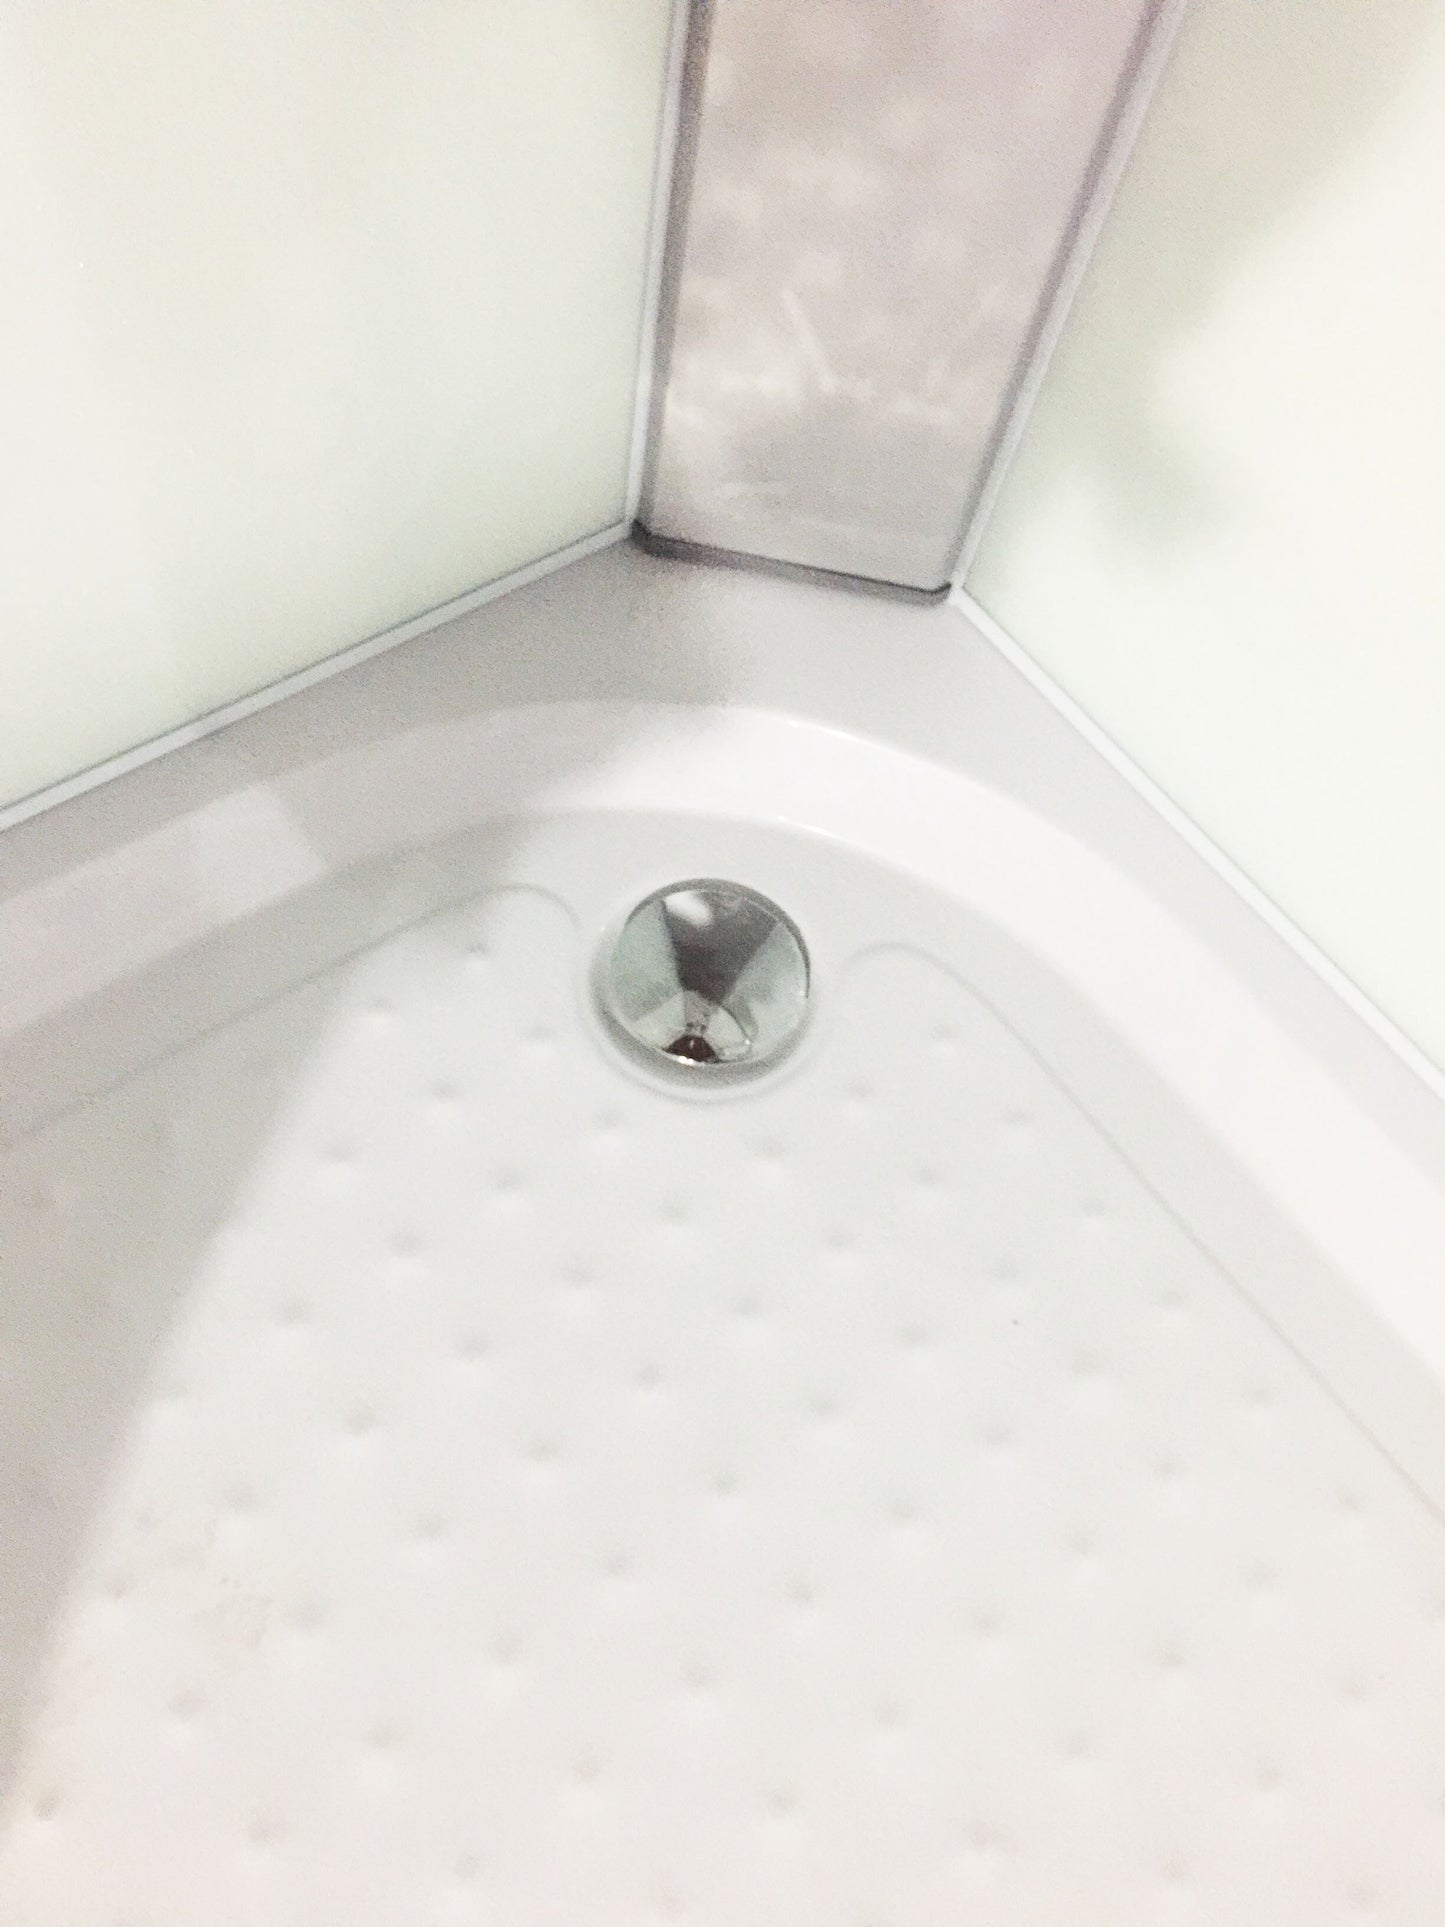 Pre-order Shower Screen Cubicle Enclosure W/T Base Bathroom 900x900x2300mm White 8226A